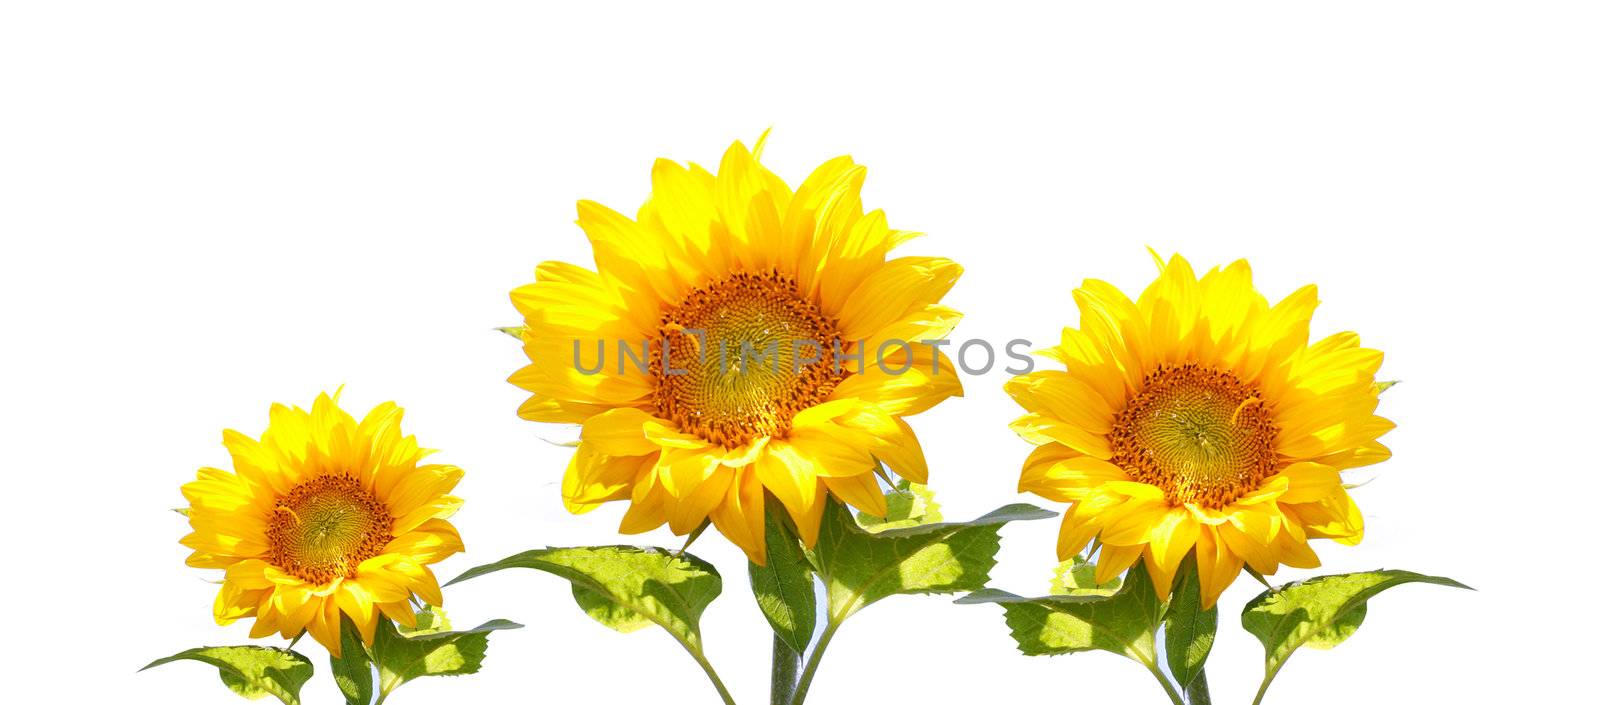 Sunflowers by leeser